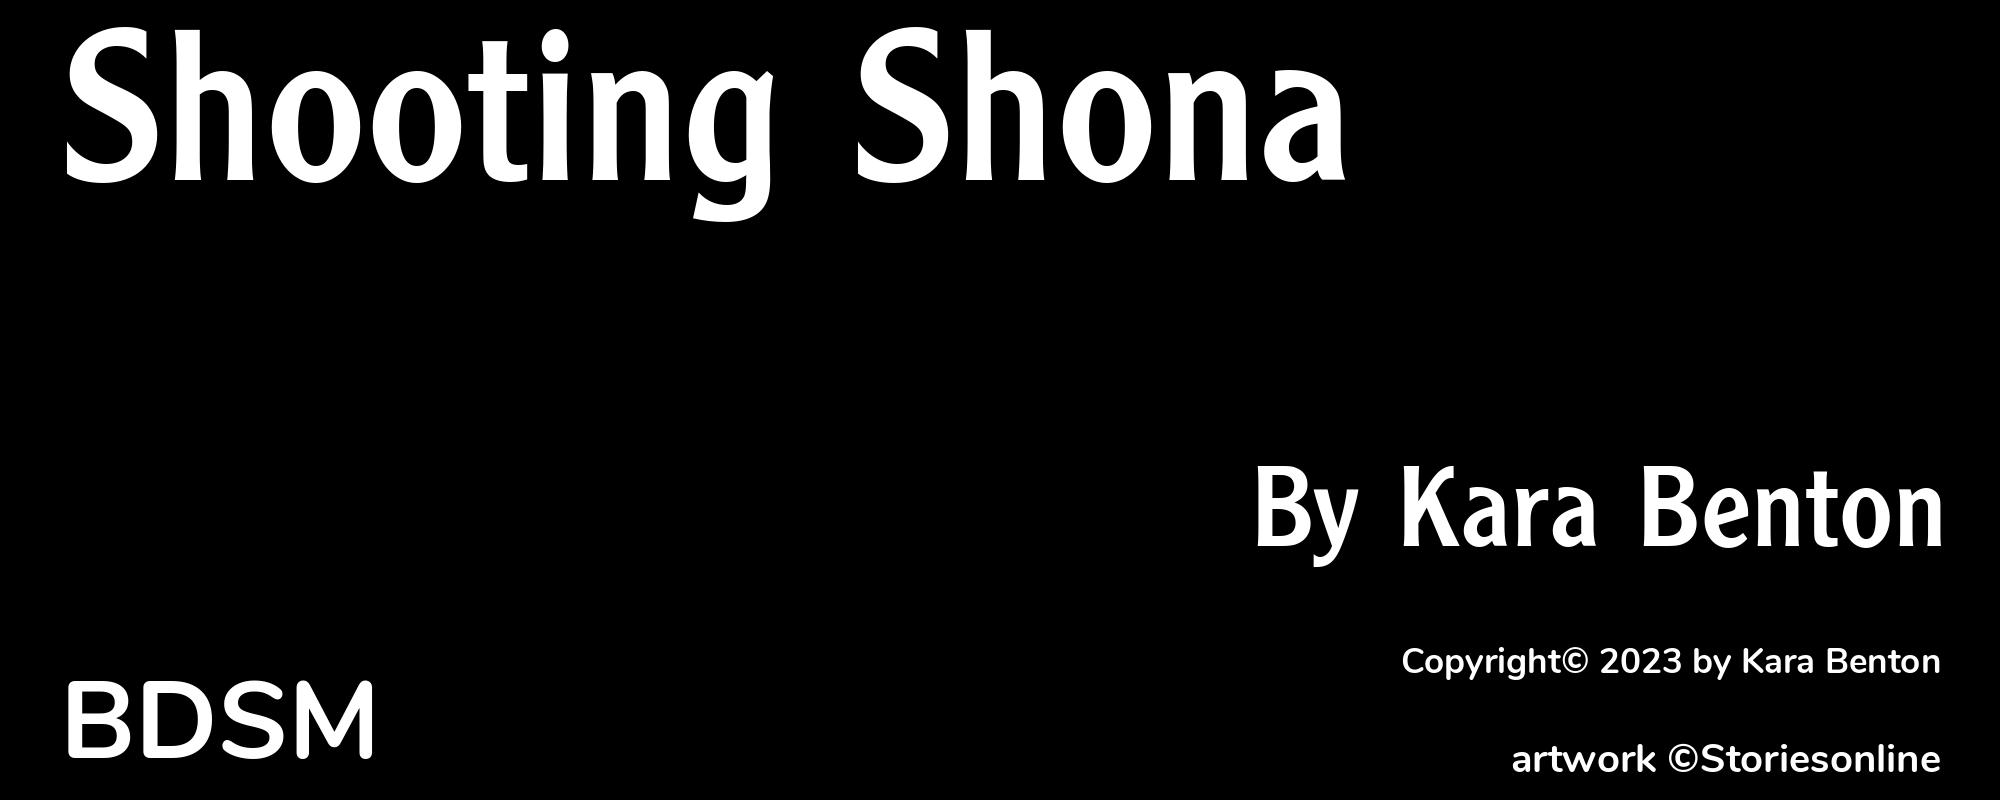 Shooting Shona - Cover